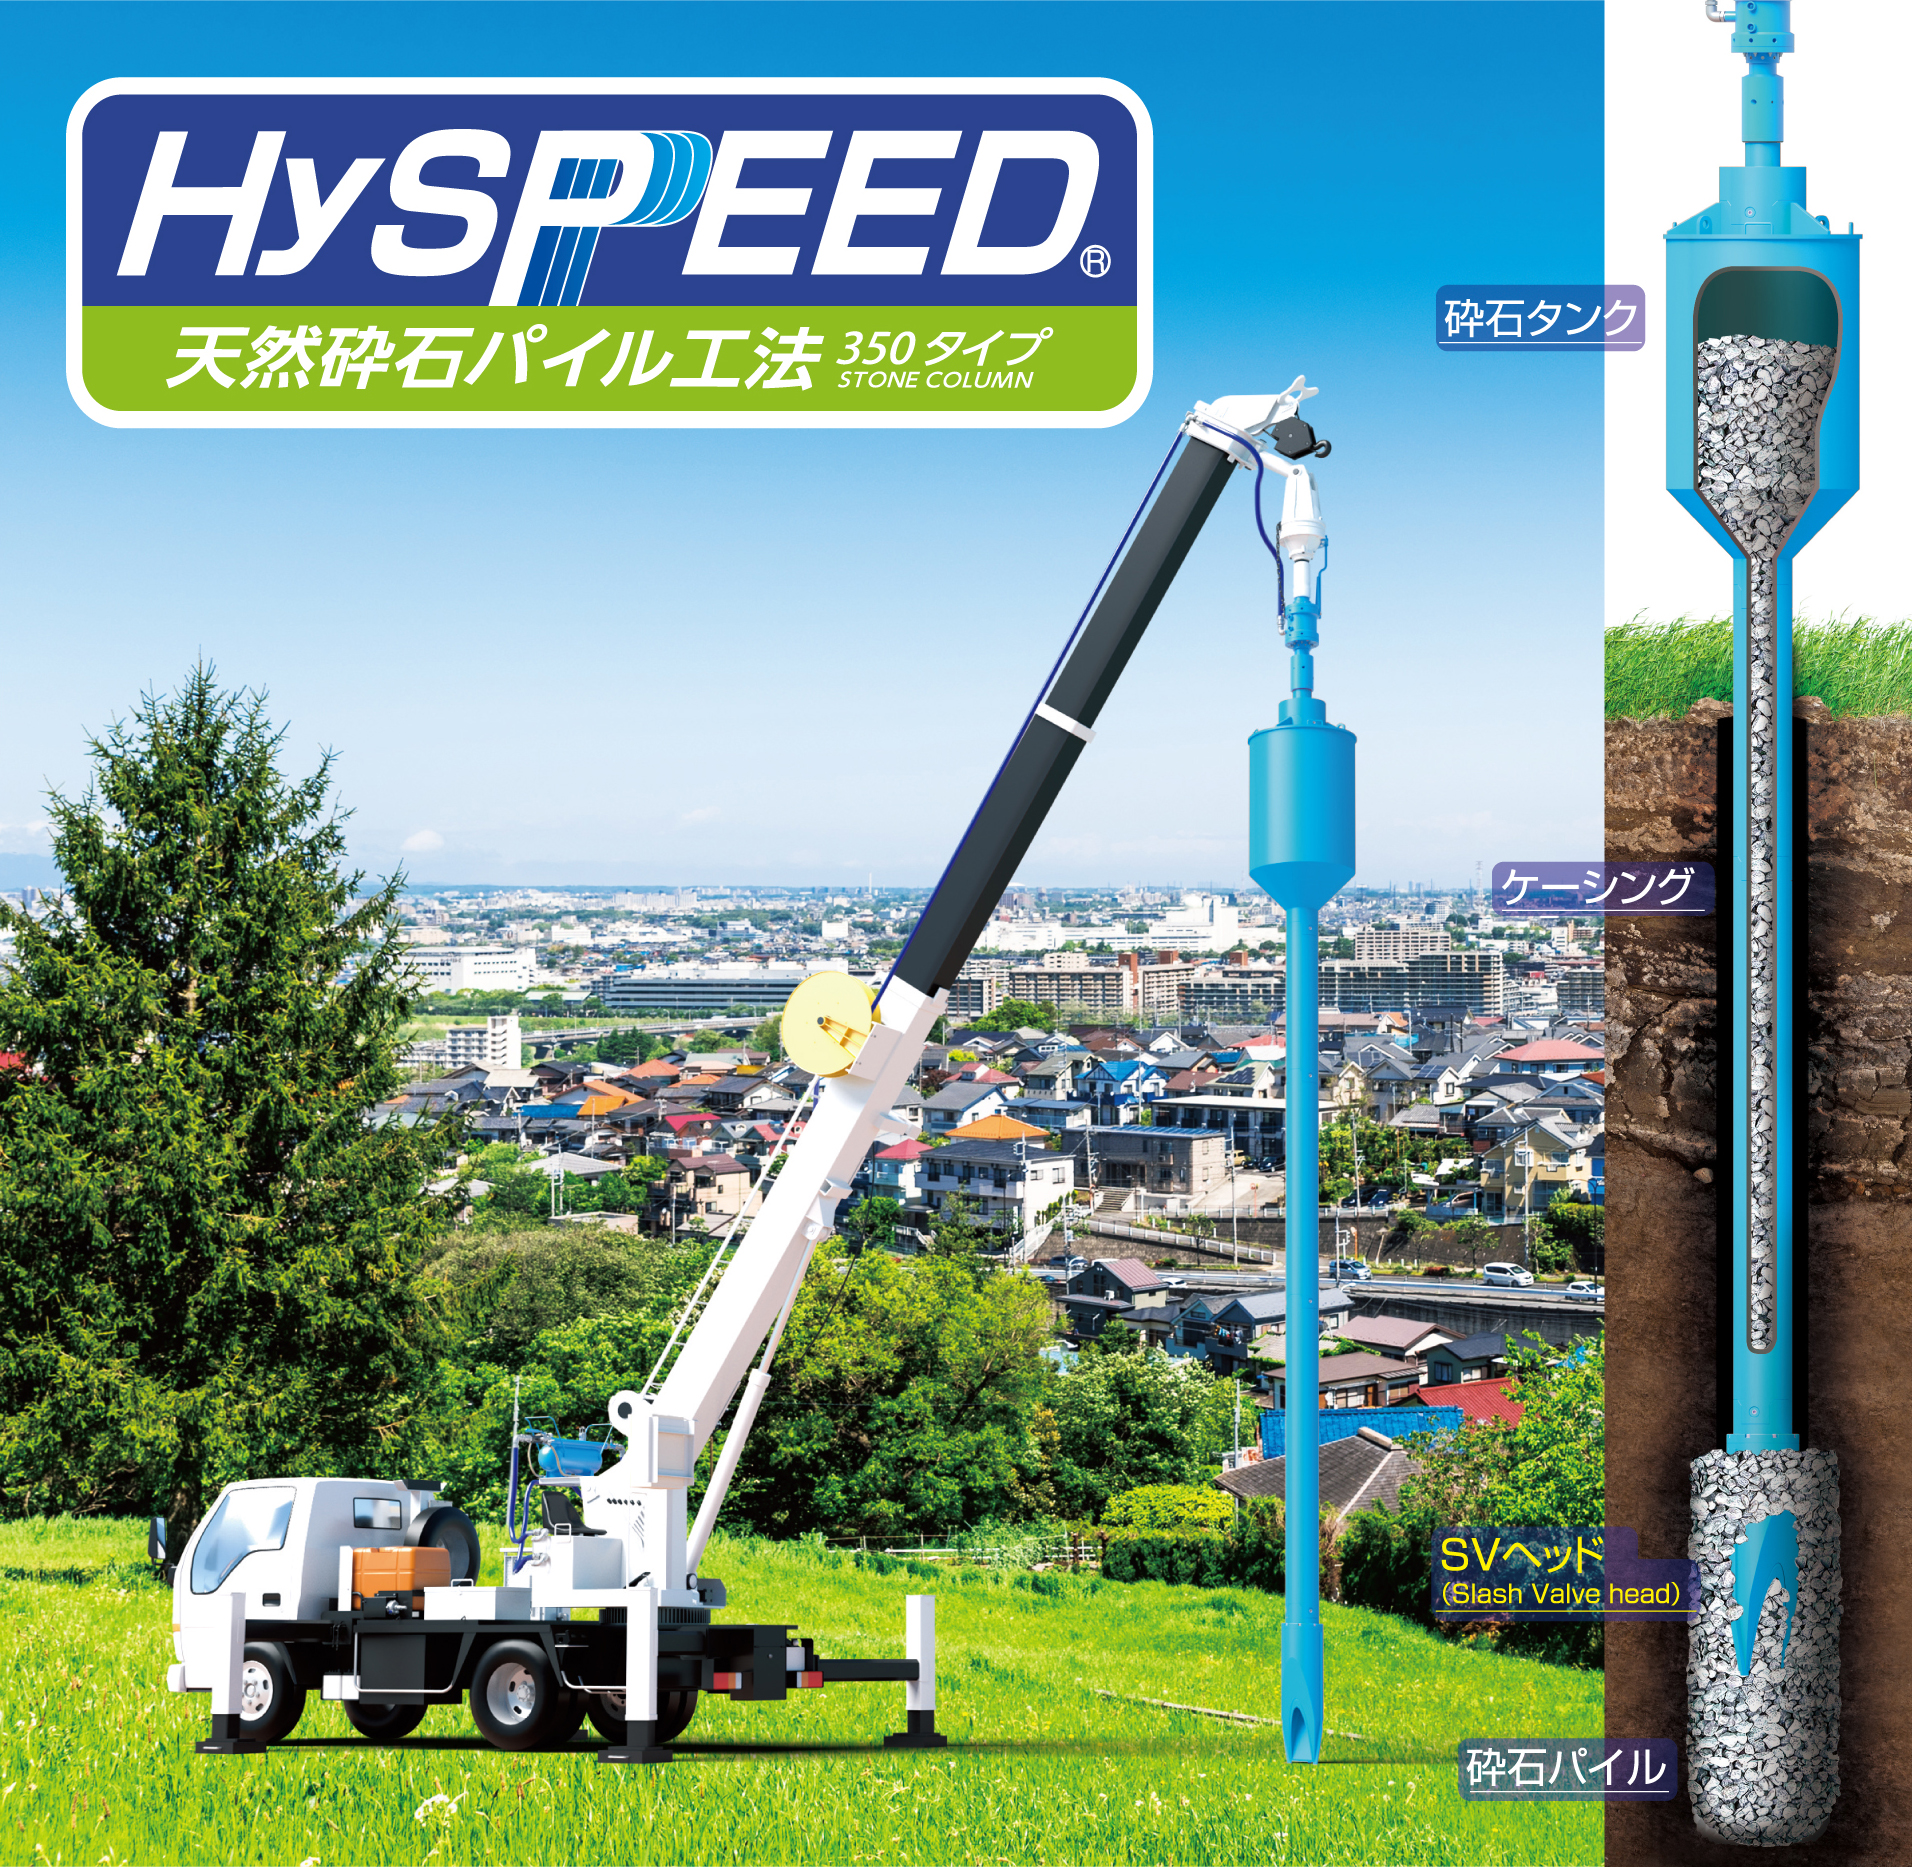 Hyspeed 350 工法 ハイスピードコーポレーション